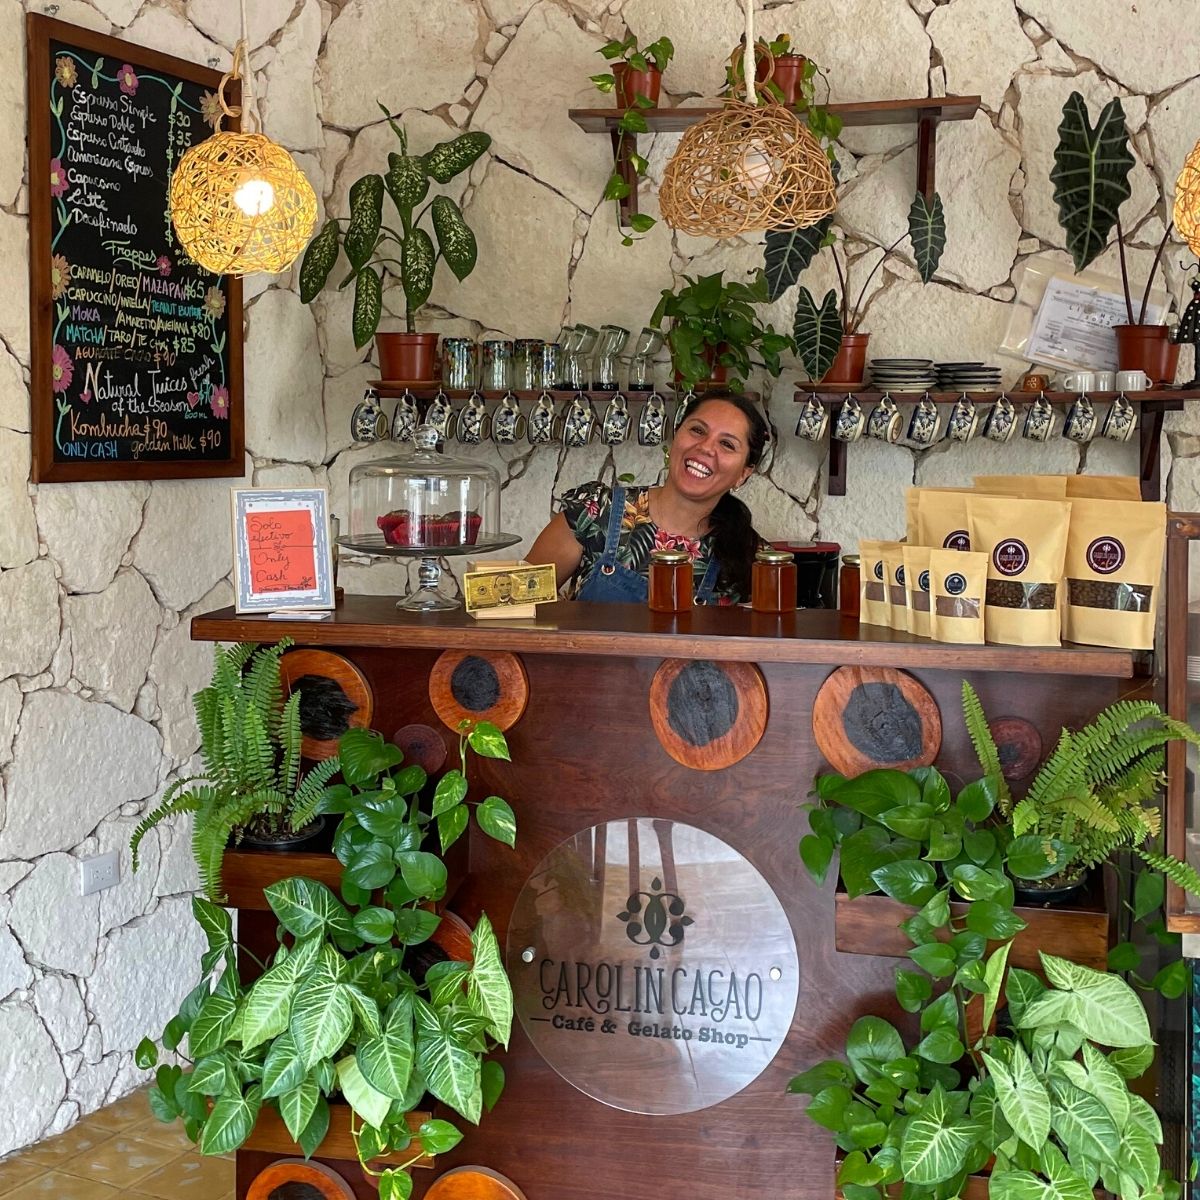 Carolin Cacao Cafe & Gelato - on Thursd - Featured